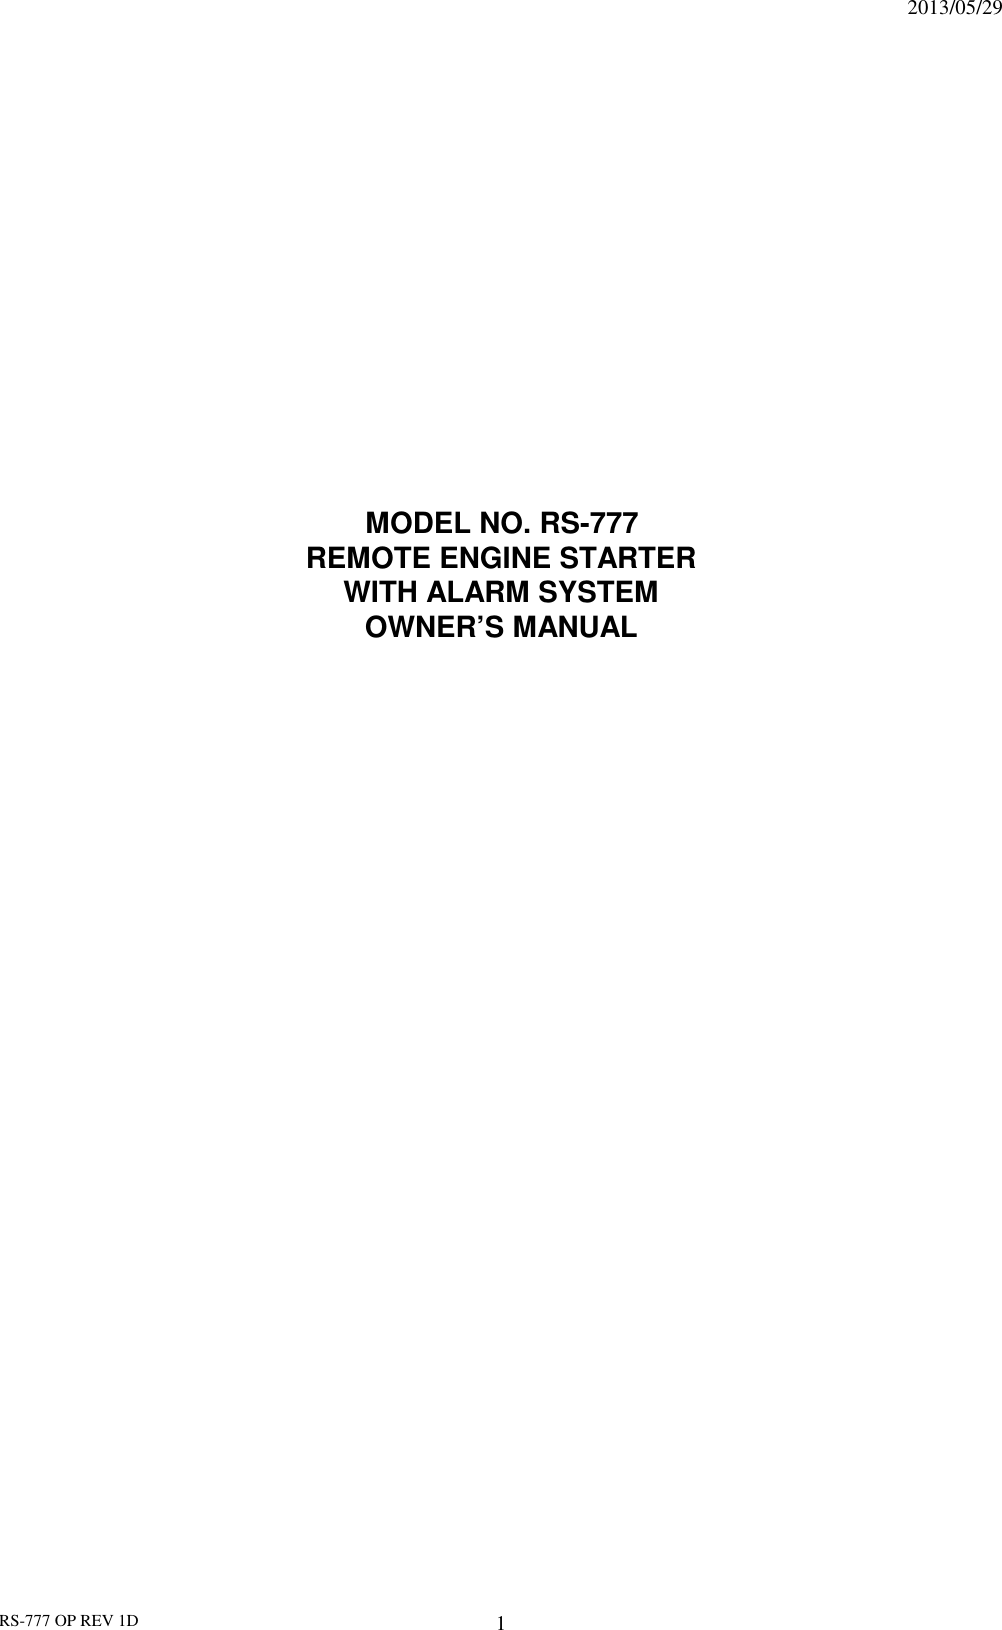                                                                              2013/05/29 RS-777 OP REV 1D 1                                   MODEL NO. RS-777 REMOTE ENGINE STARTER WITH ALARM SYSTEM OWNER’S MANUAL                                